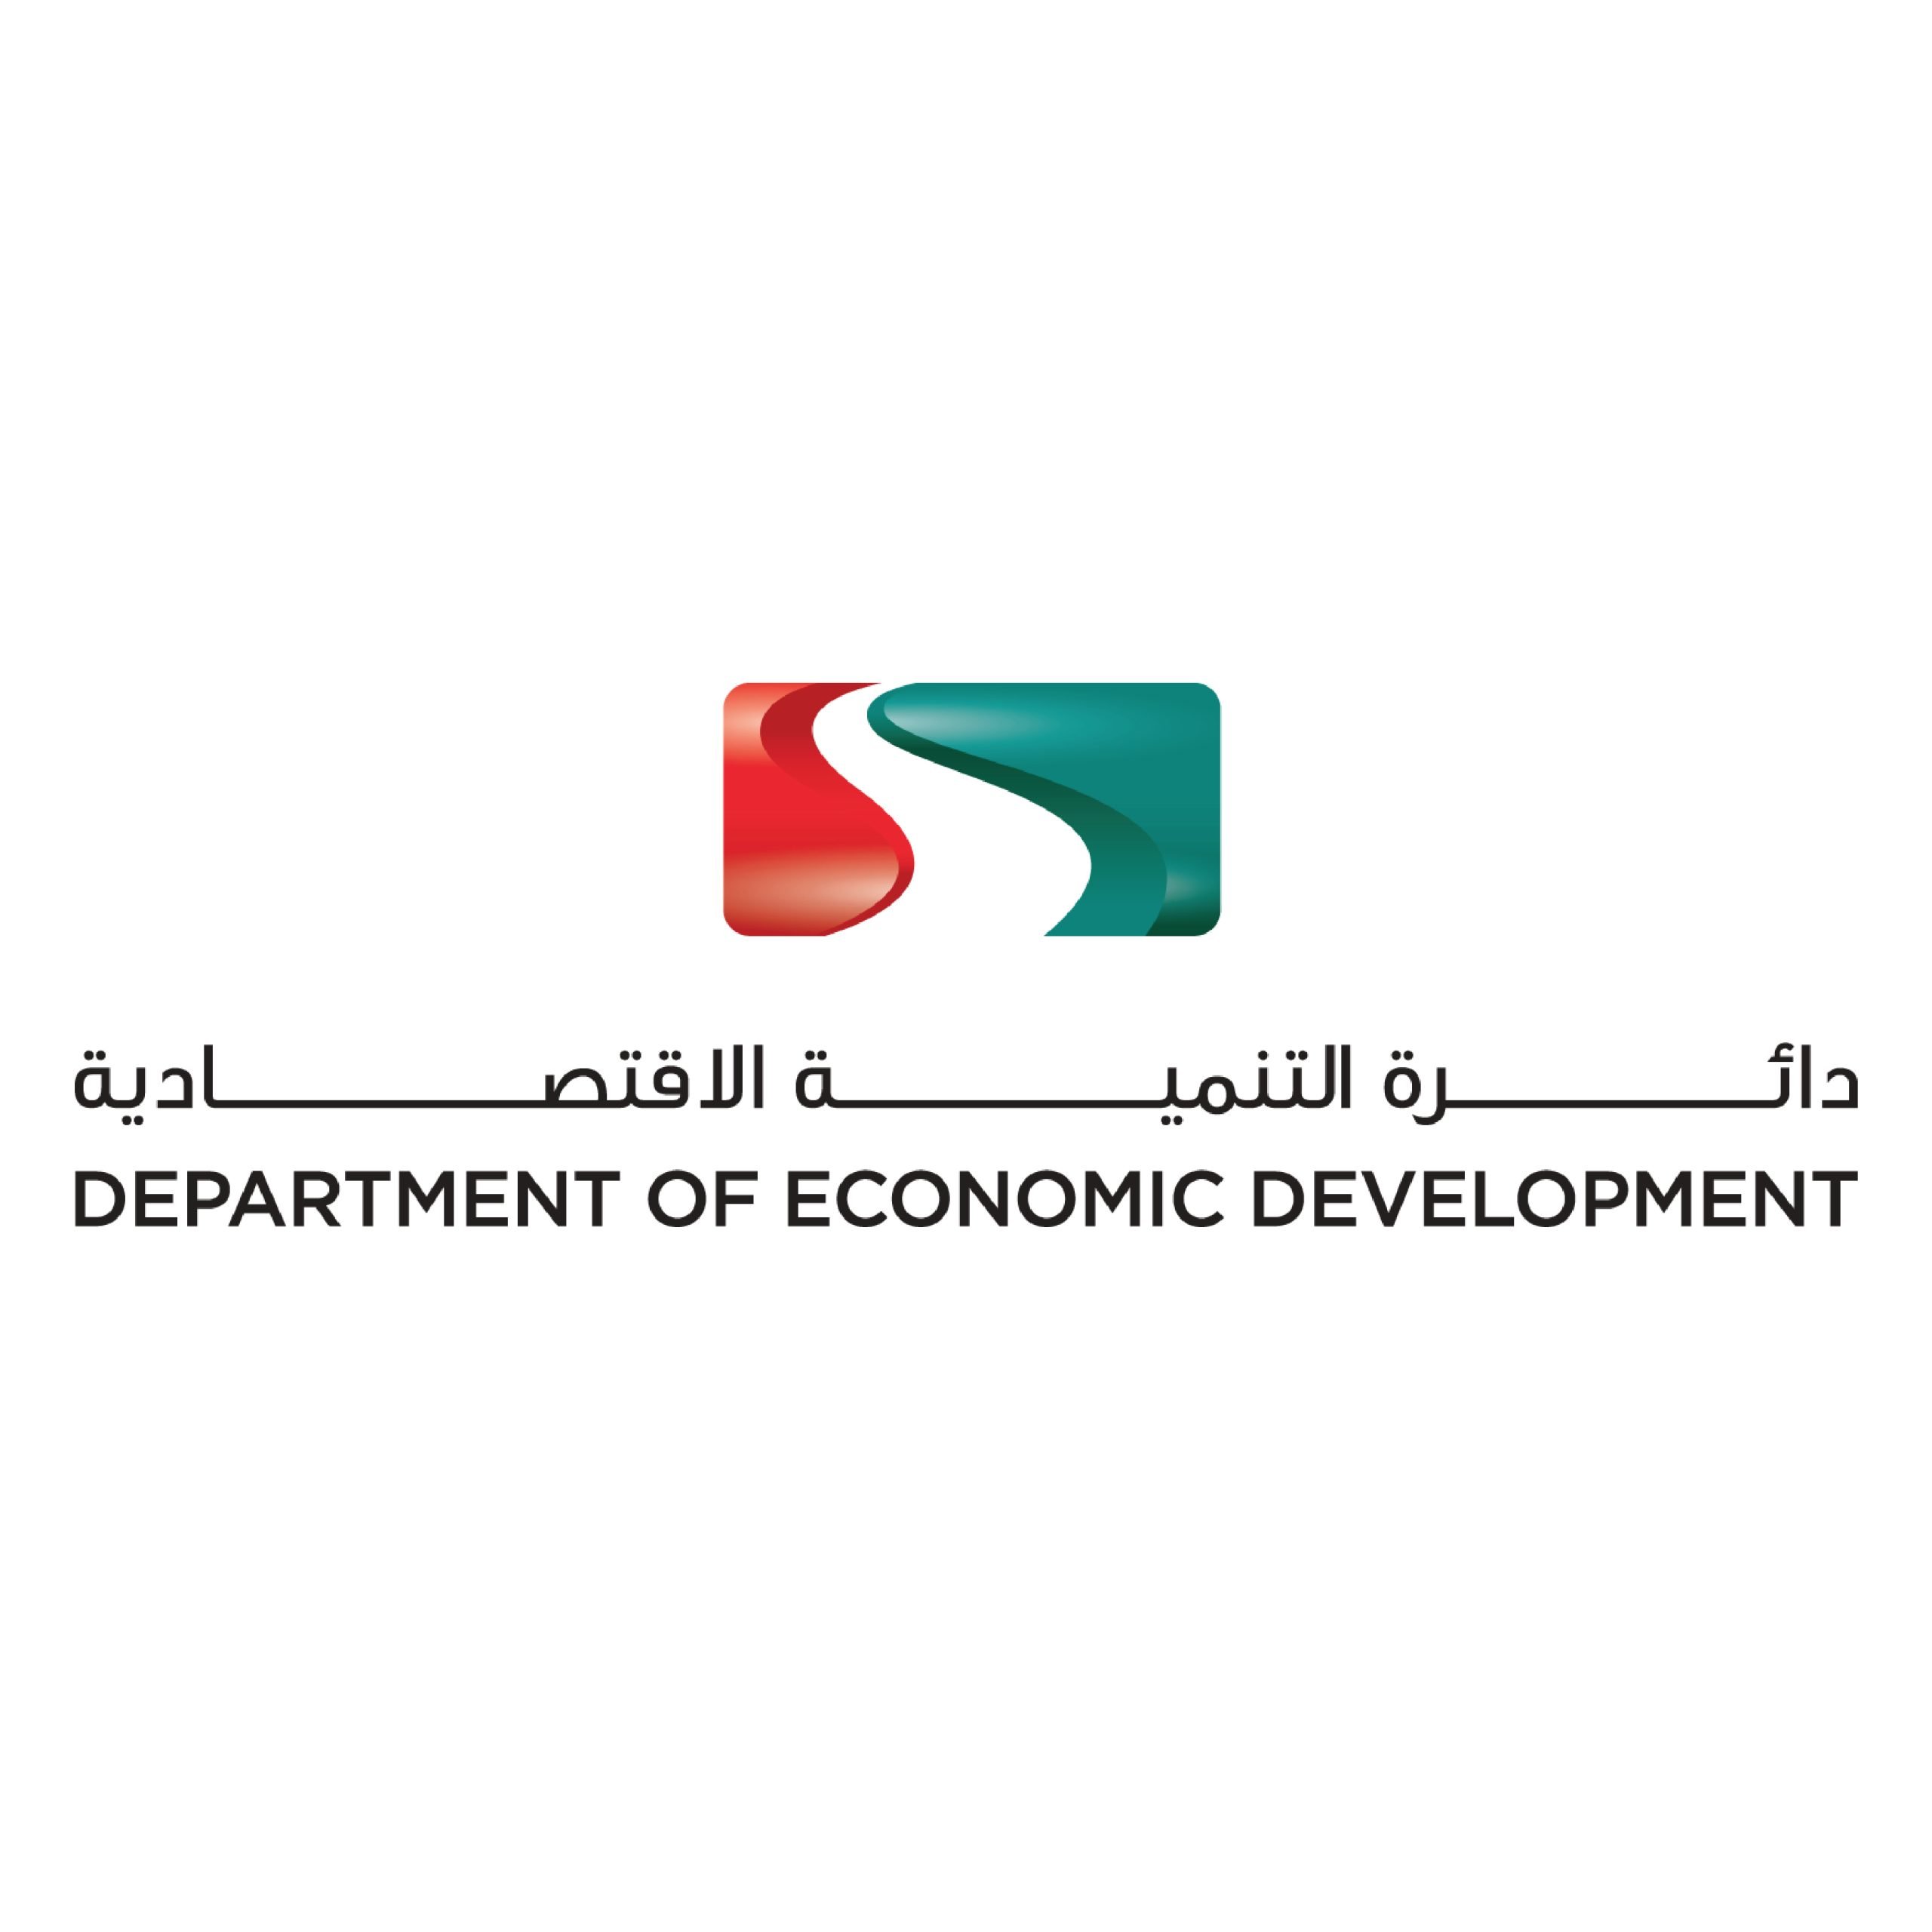 department of economic development logo-01